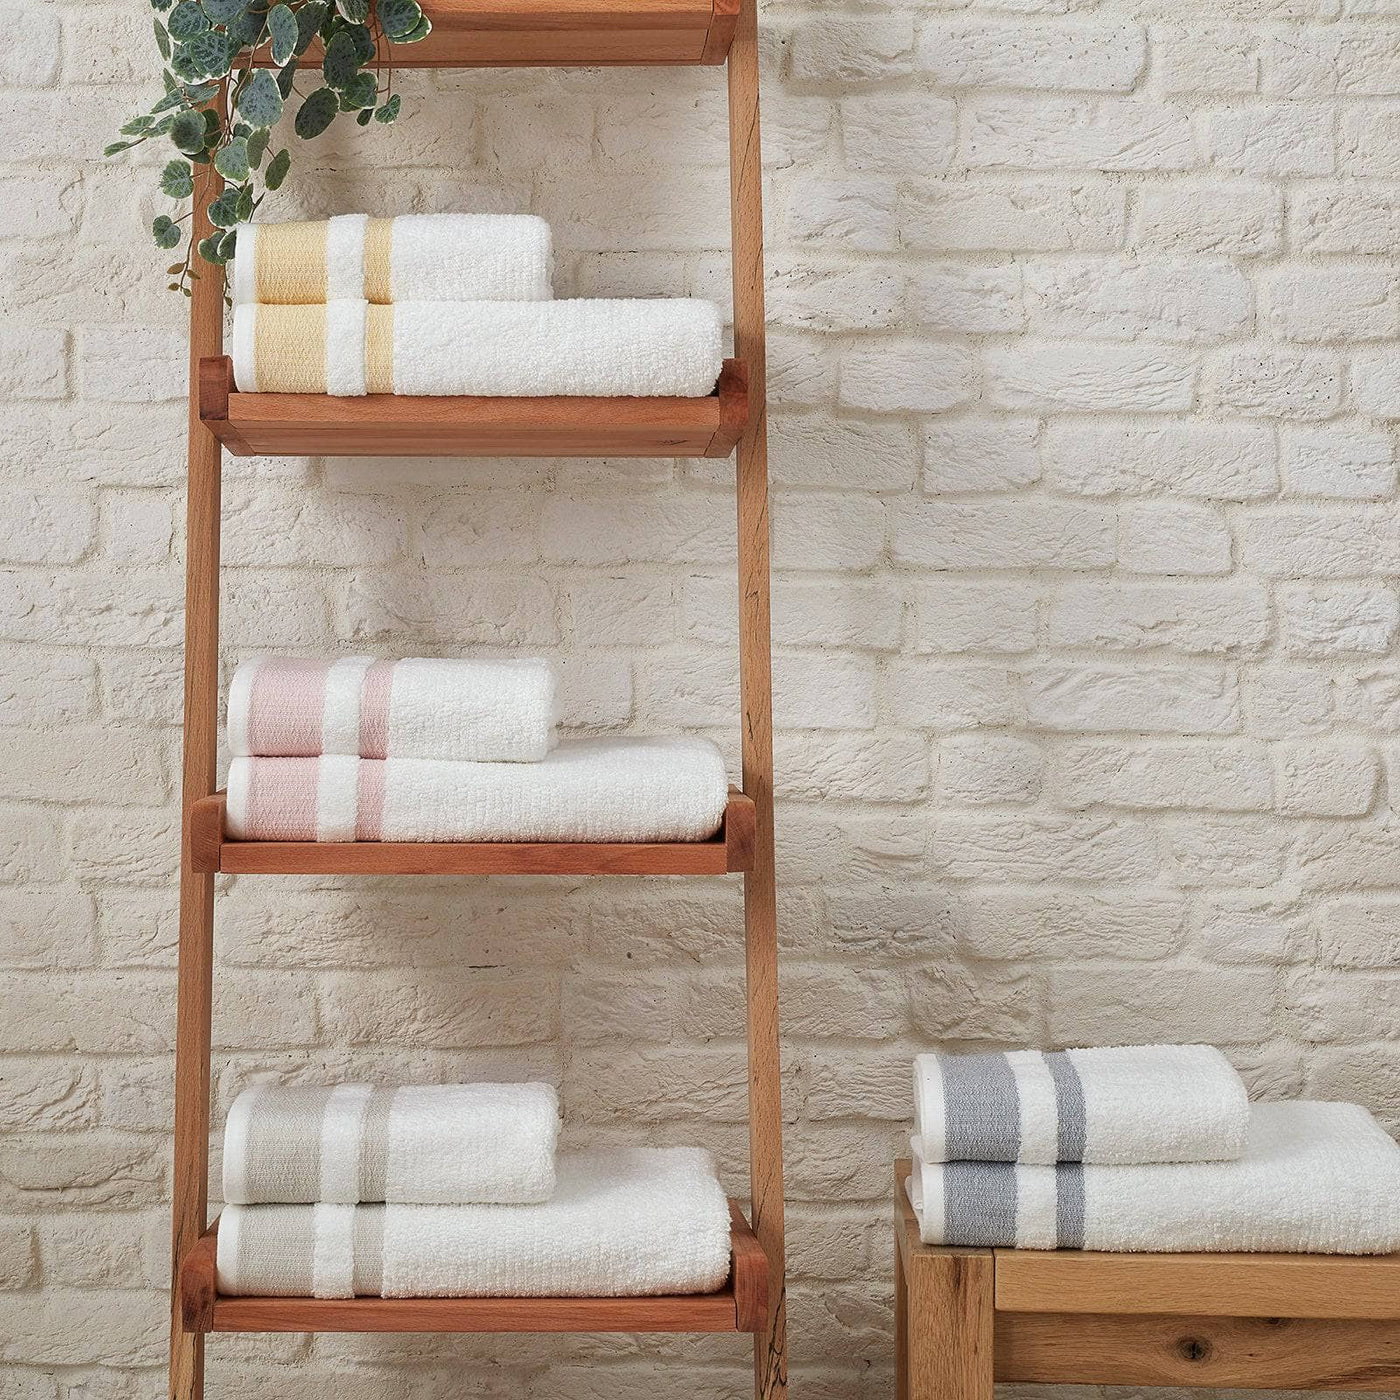 Charlotte Striped 100% Turkish Cotton Towel Set, Mustard Towel Sets sazy.com